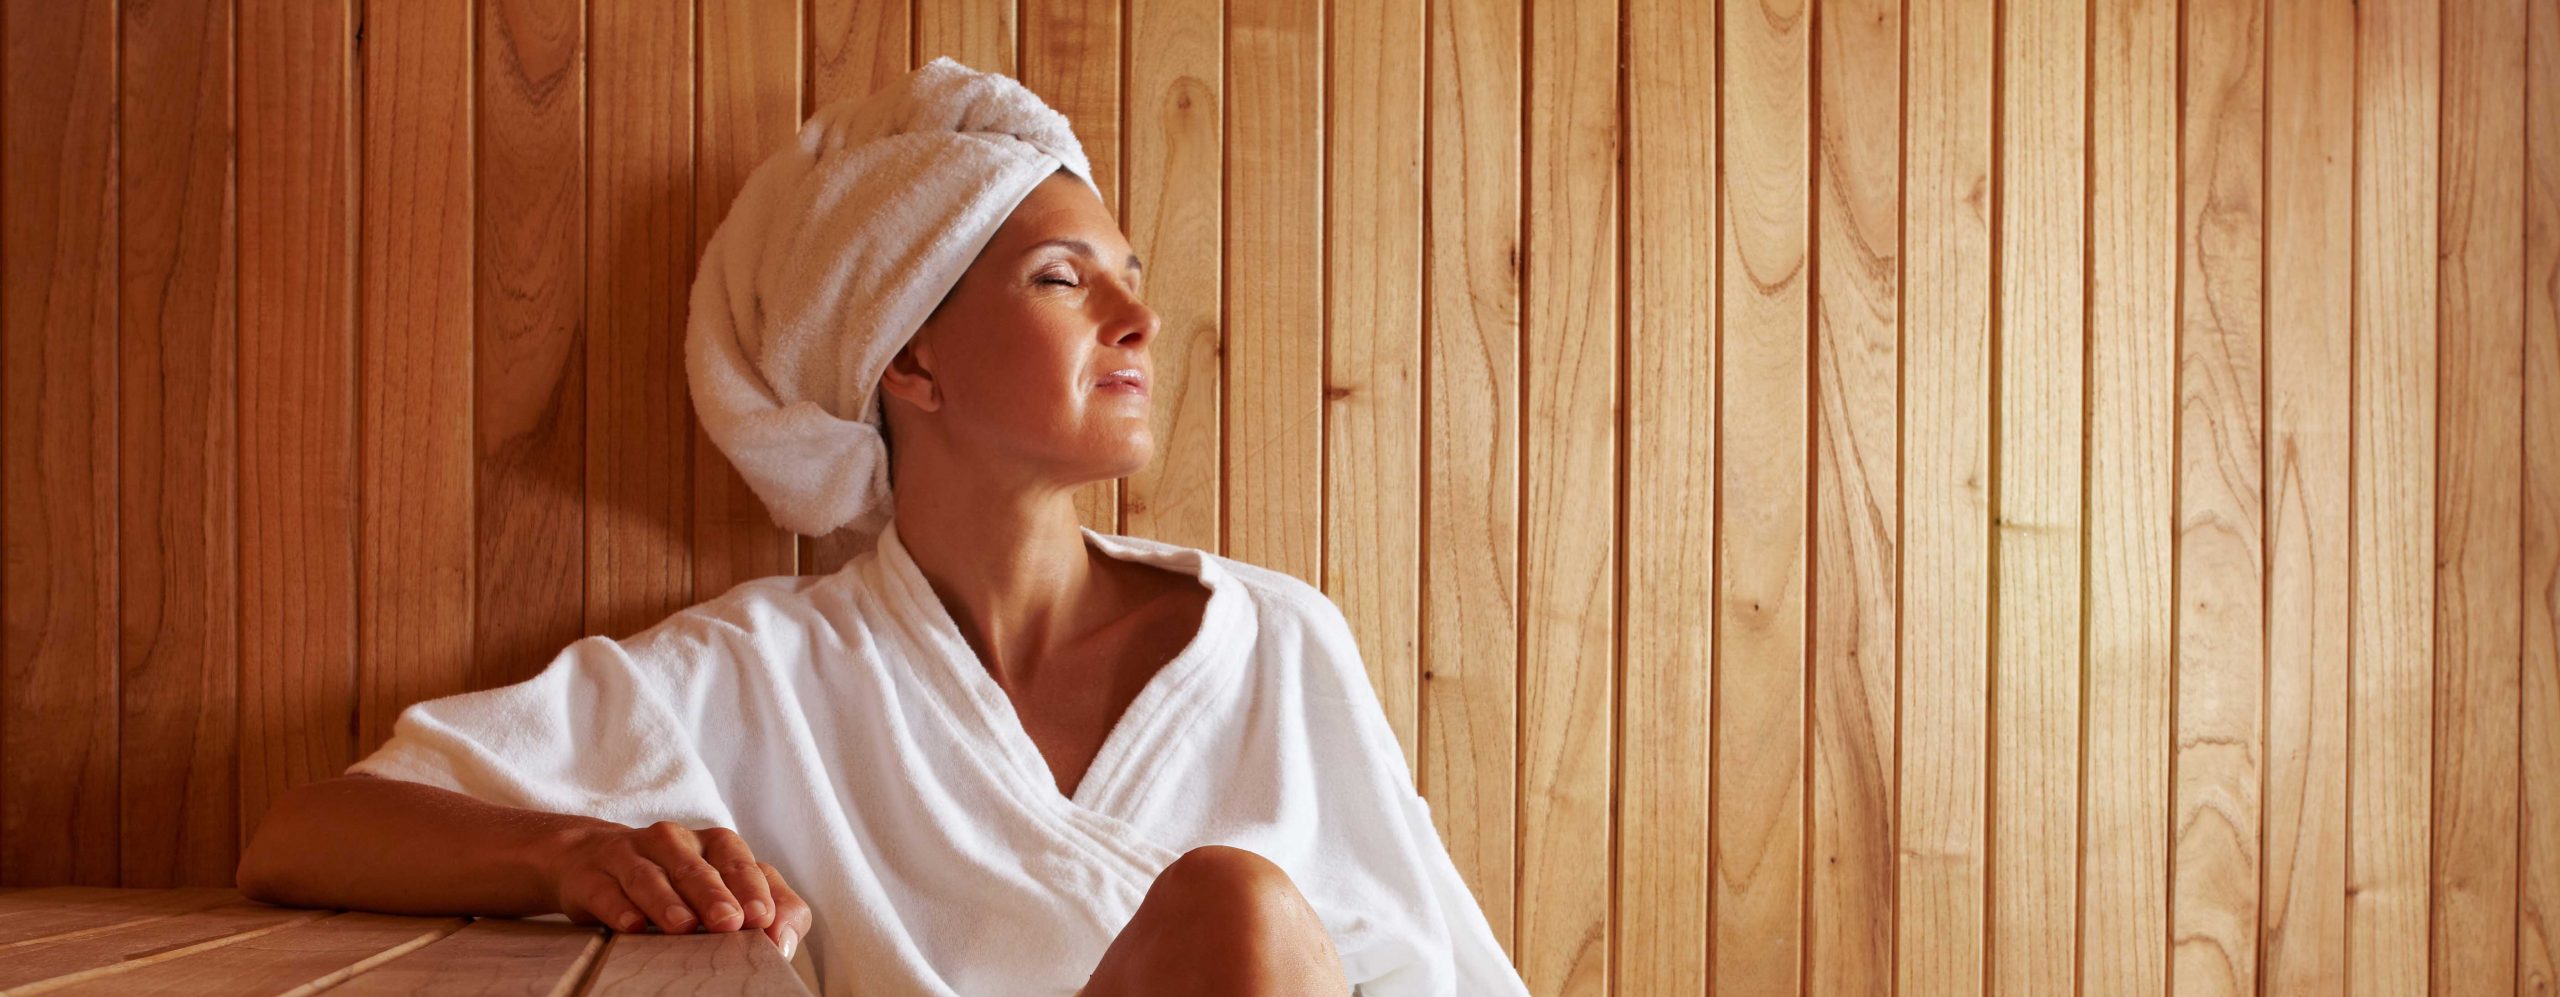 Woman Using Infrared Sauna for Respiratory Benefits